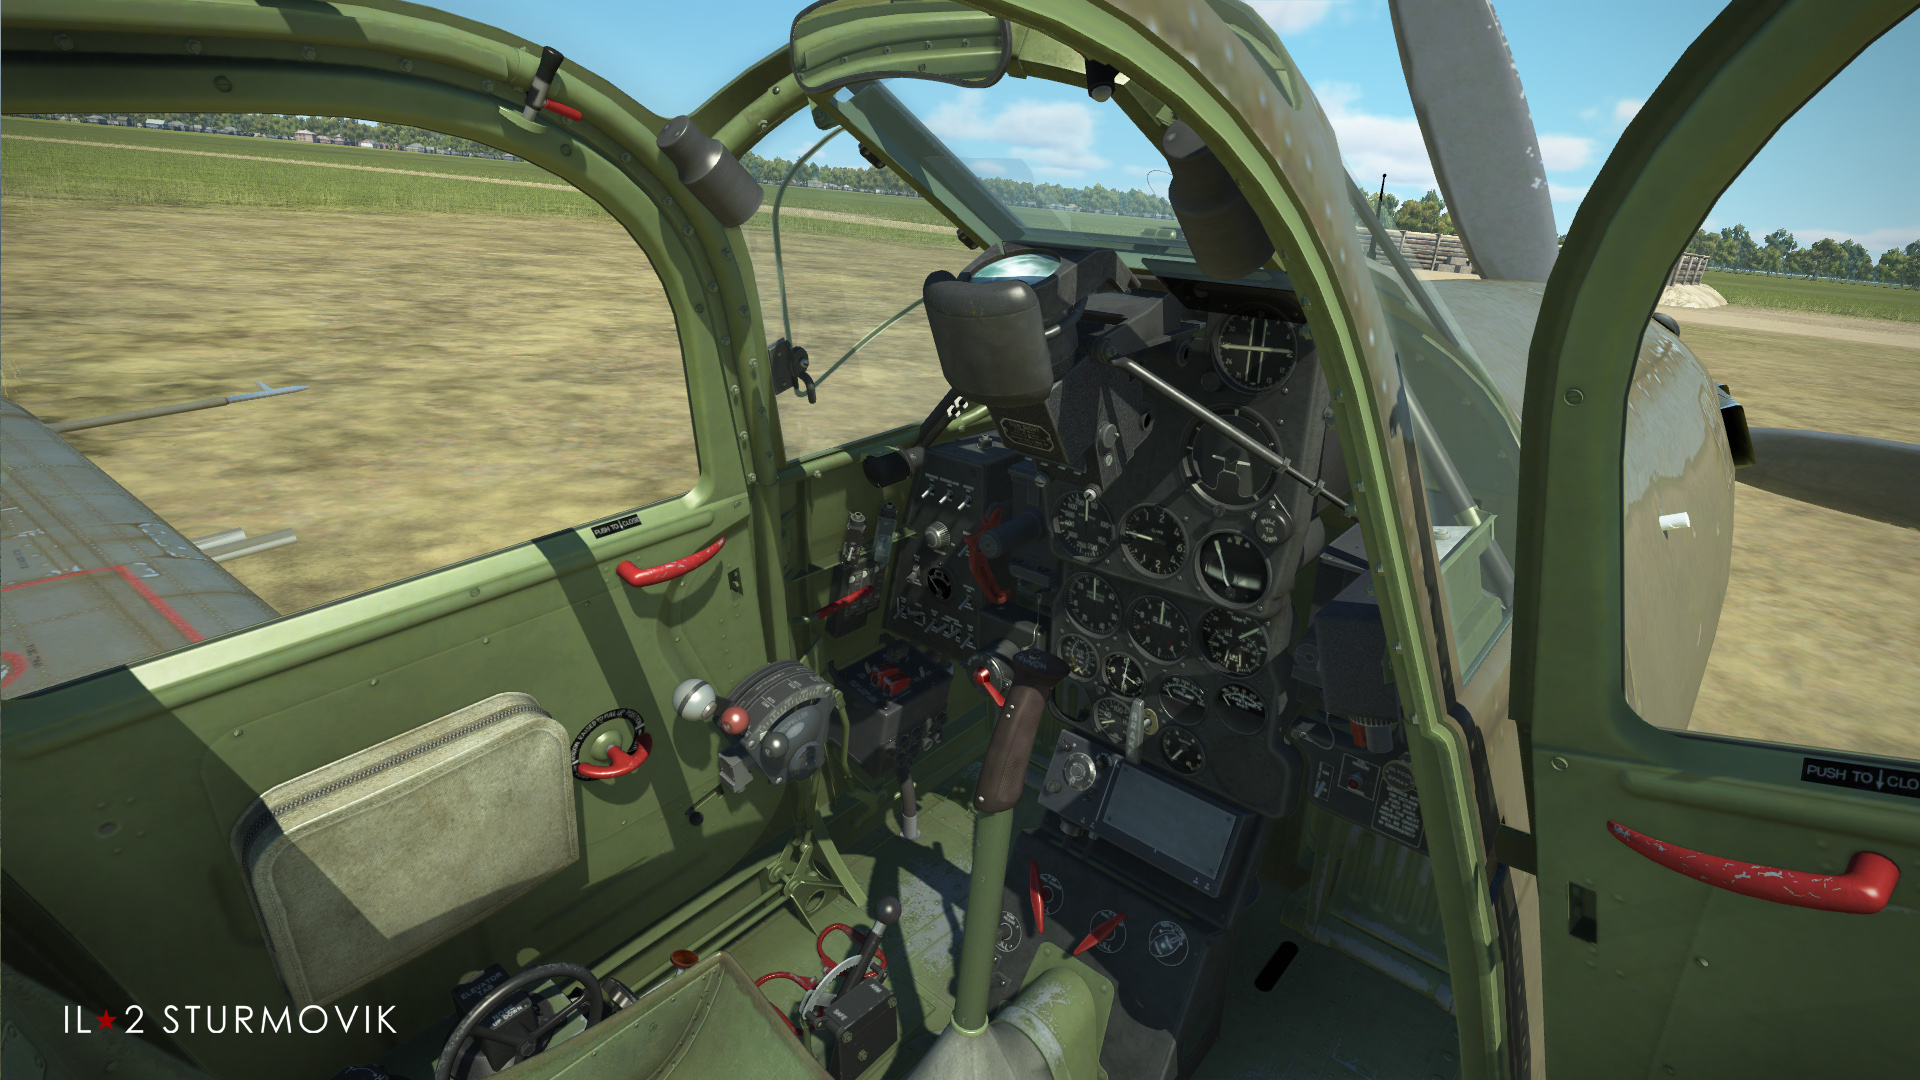 IL-2 Sturmovik: Battle of Kuban on Steam